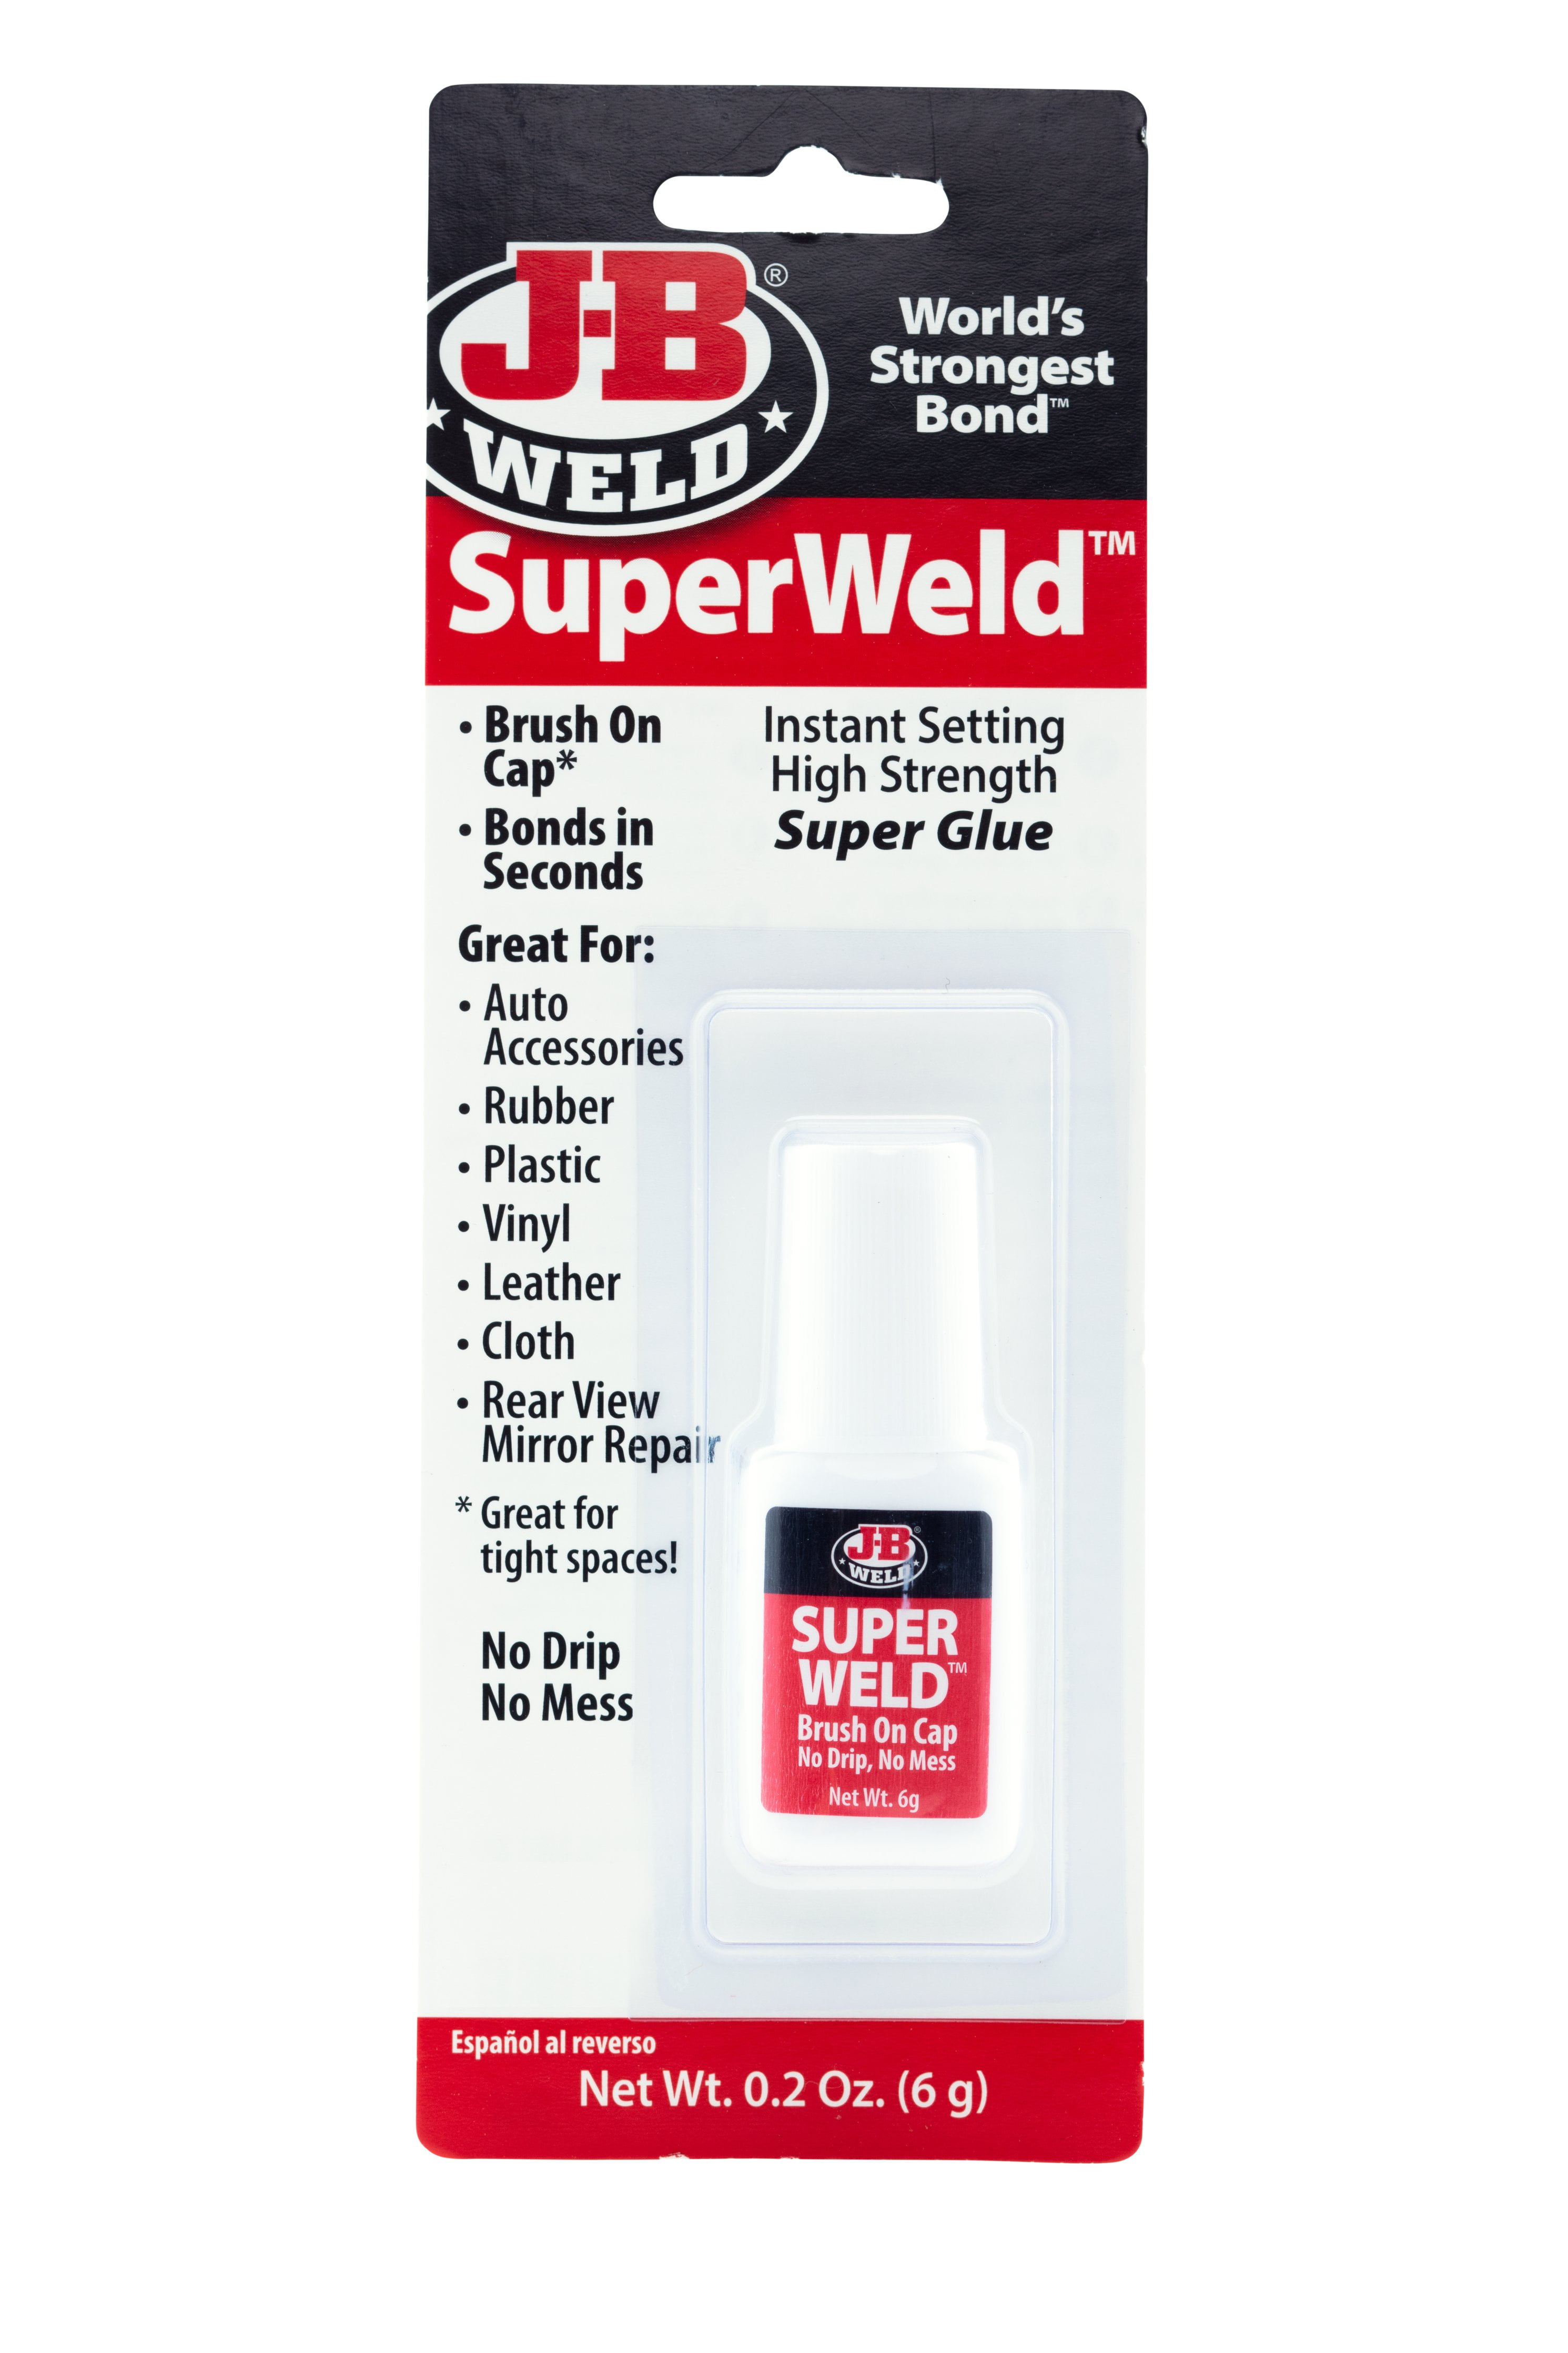 Delta Sobo Glue FAQ - Brand - DIY Craft Supplies